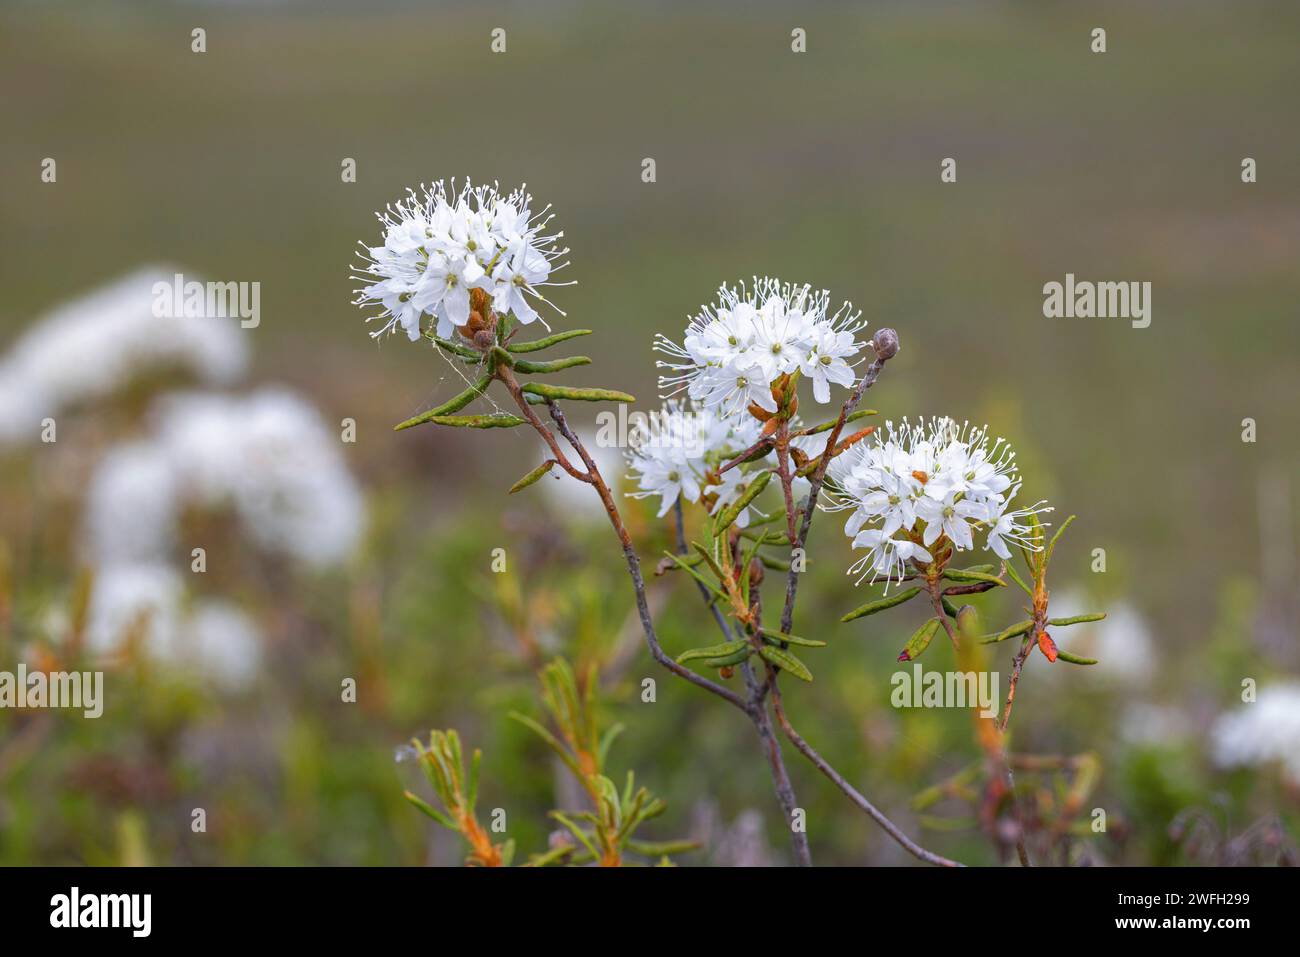 Wild Rosemary, Marsh Labrador tea, northern Labrador tea (Ledum palustre, Rhododendron tomentosum, Rhododendron palustre), blooming, Finland, Lapland, Stock Photo